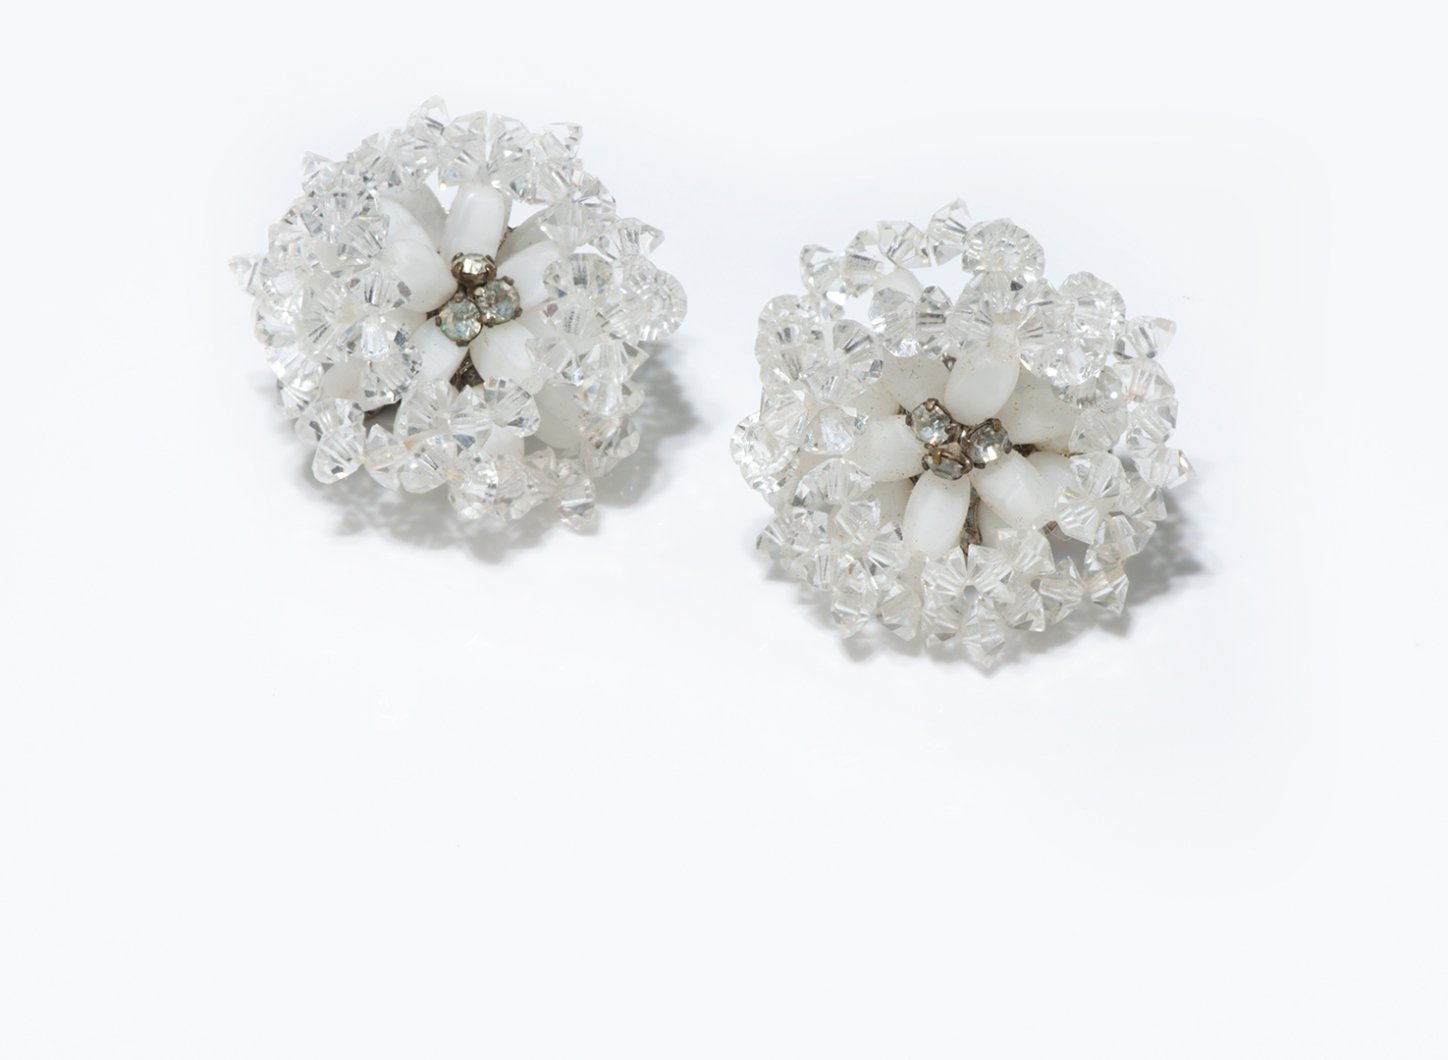 Vintage 1960's Vendome White Crystal Glass Beads Earrings